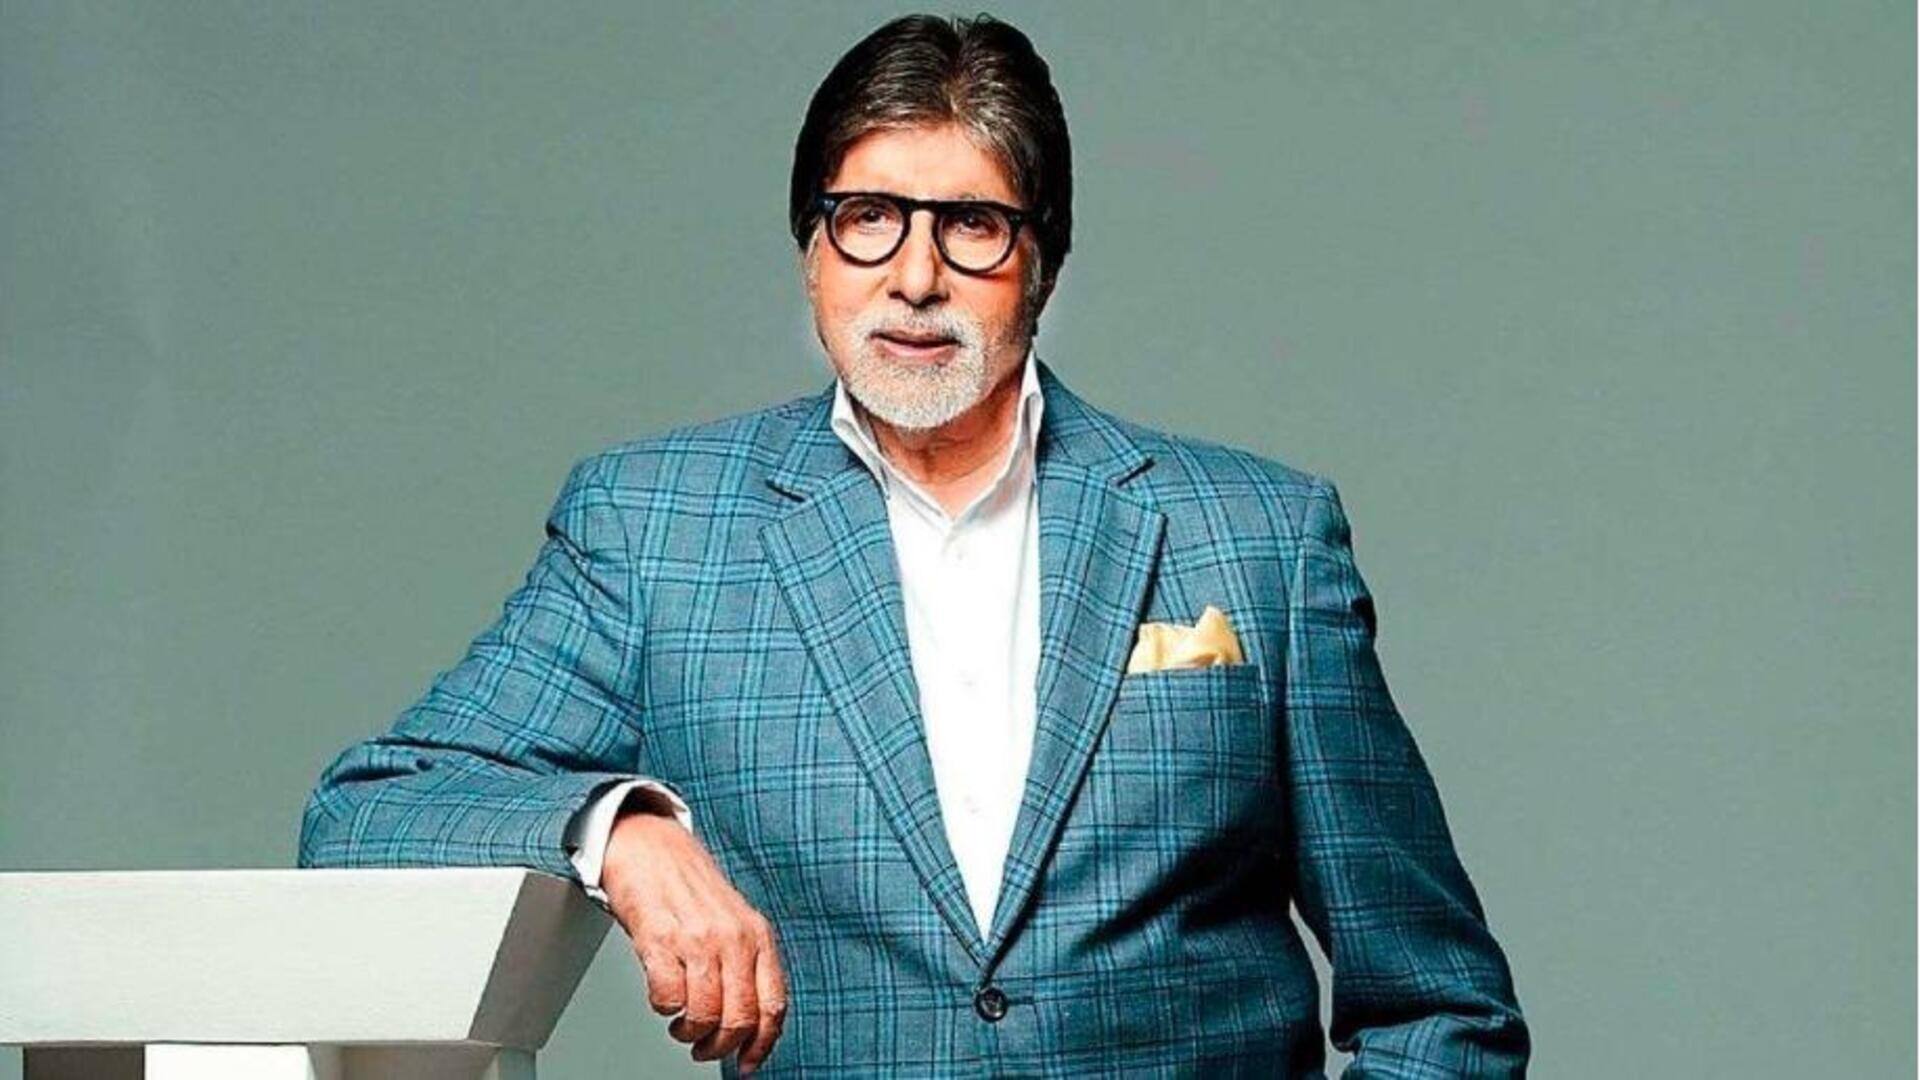 अमिताभ बच्चन ने दिवंगत अभिनेत्री सुलोचना लाटकर को दी श्रद्धांजलि, लिखा भावुक नोट 